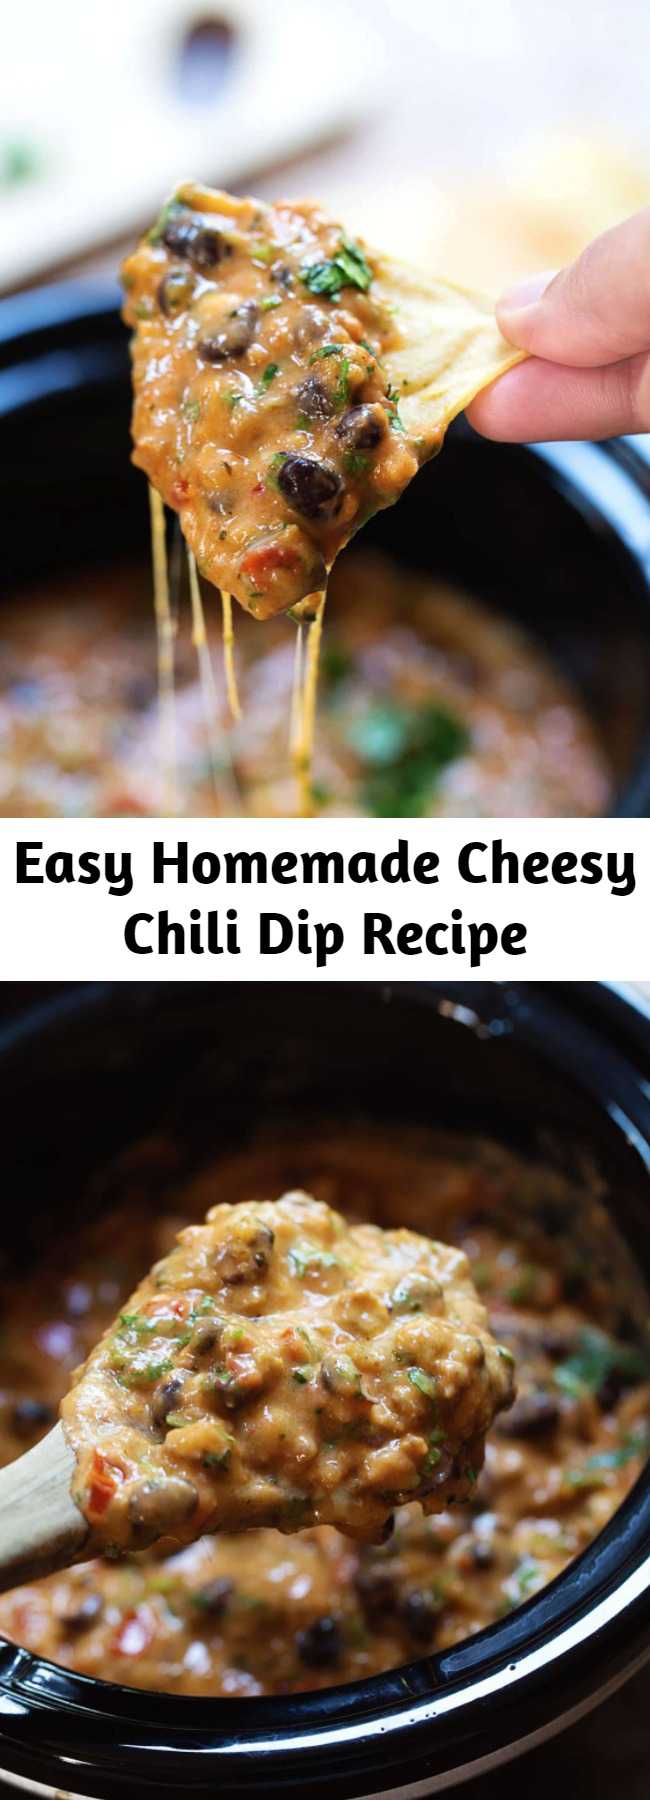 Easy Homemade Cheesy Chili Dip Recipe - This Homemade Cheesy Chili Dip is made without the processed cheese! Just homemade spicy chili and creamy cheese sauce. Deeeelish!